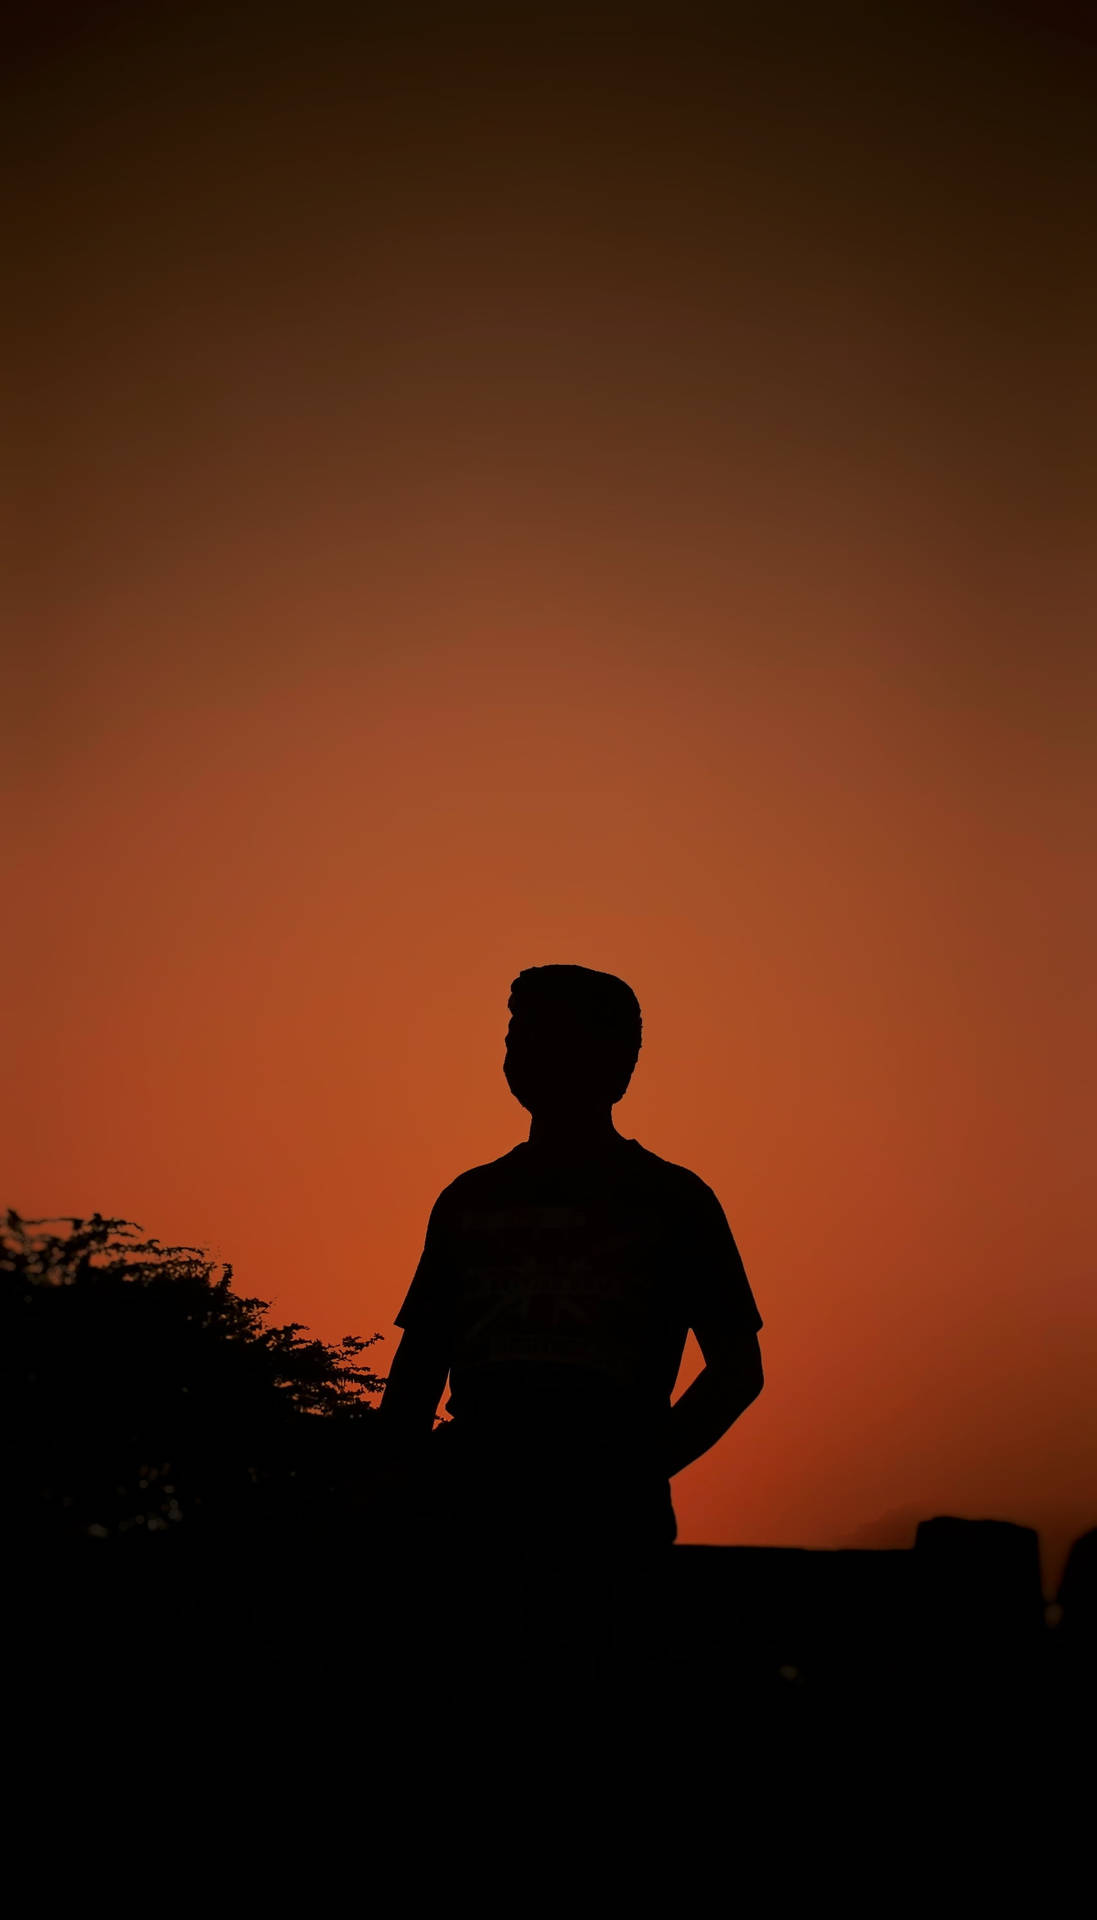 Boy Shadow On An Orange Sunset Sky